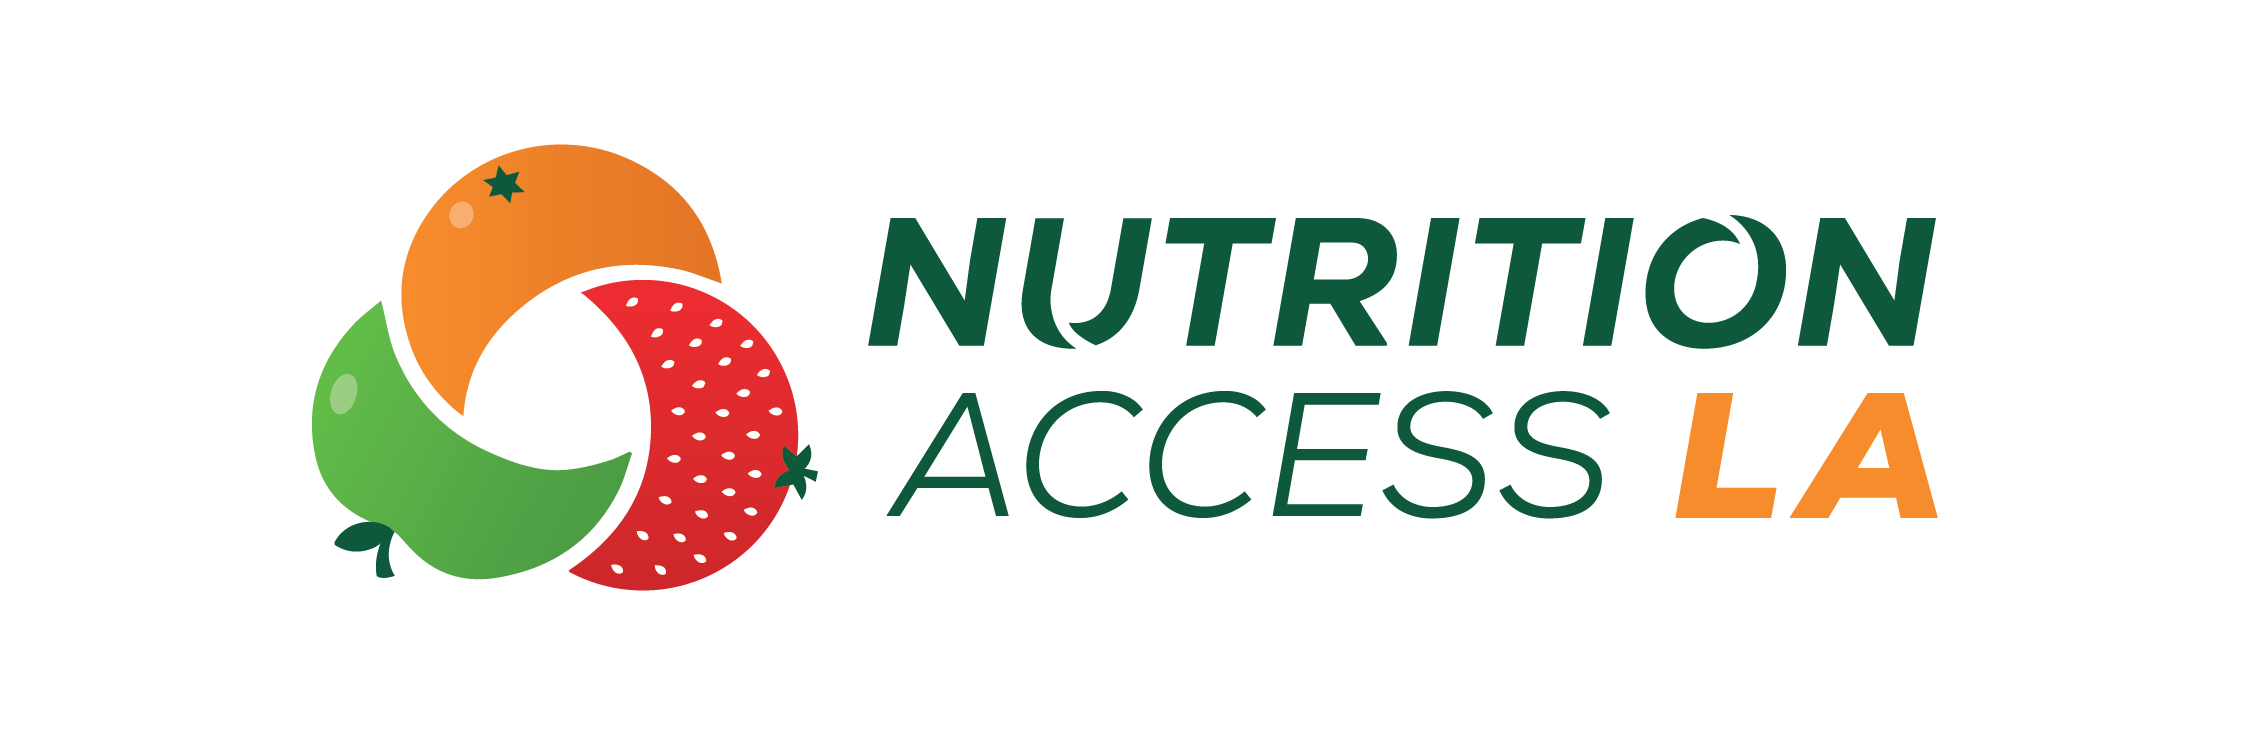 Nutrition Access LA